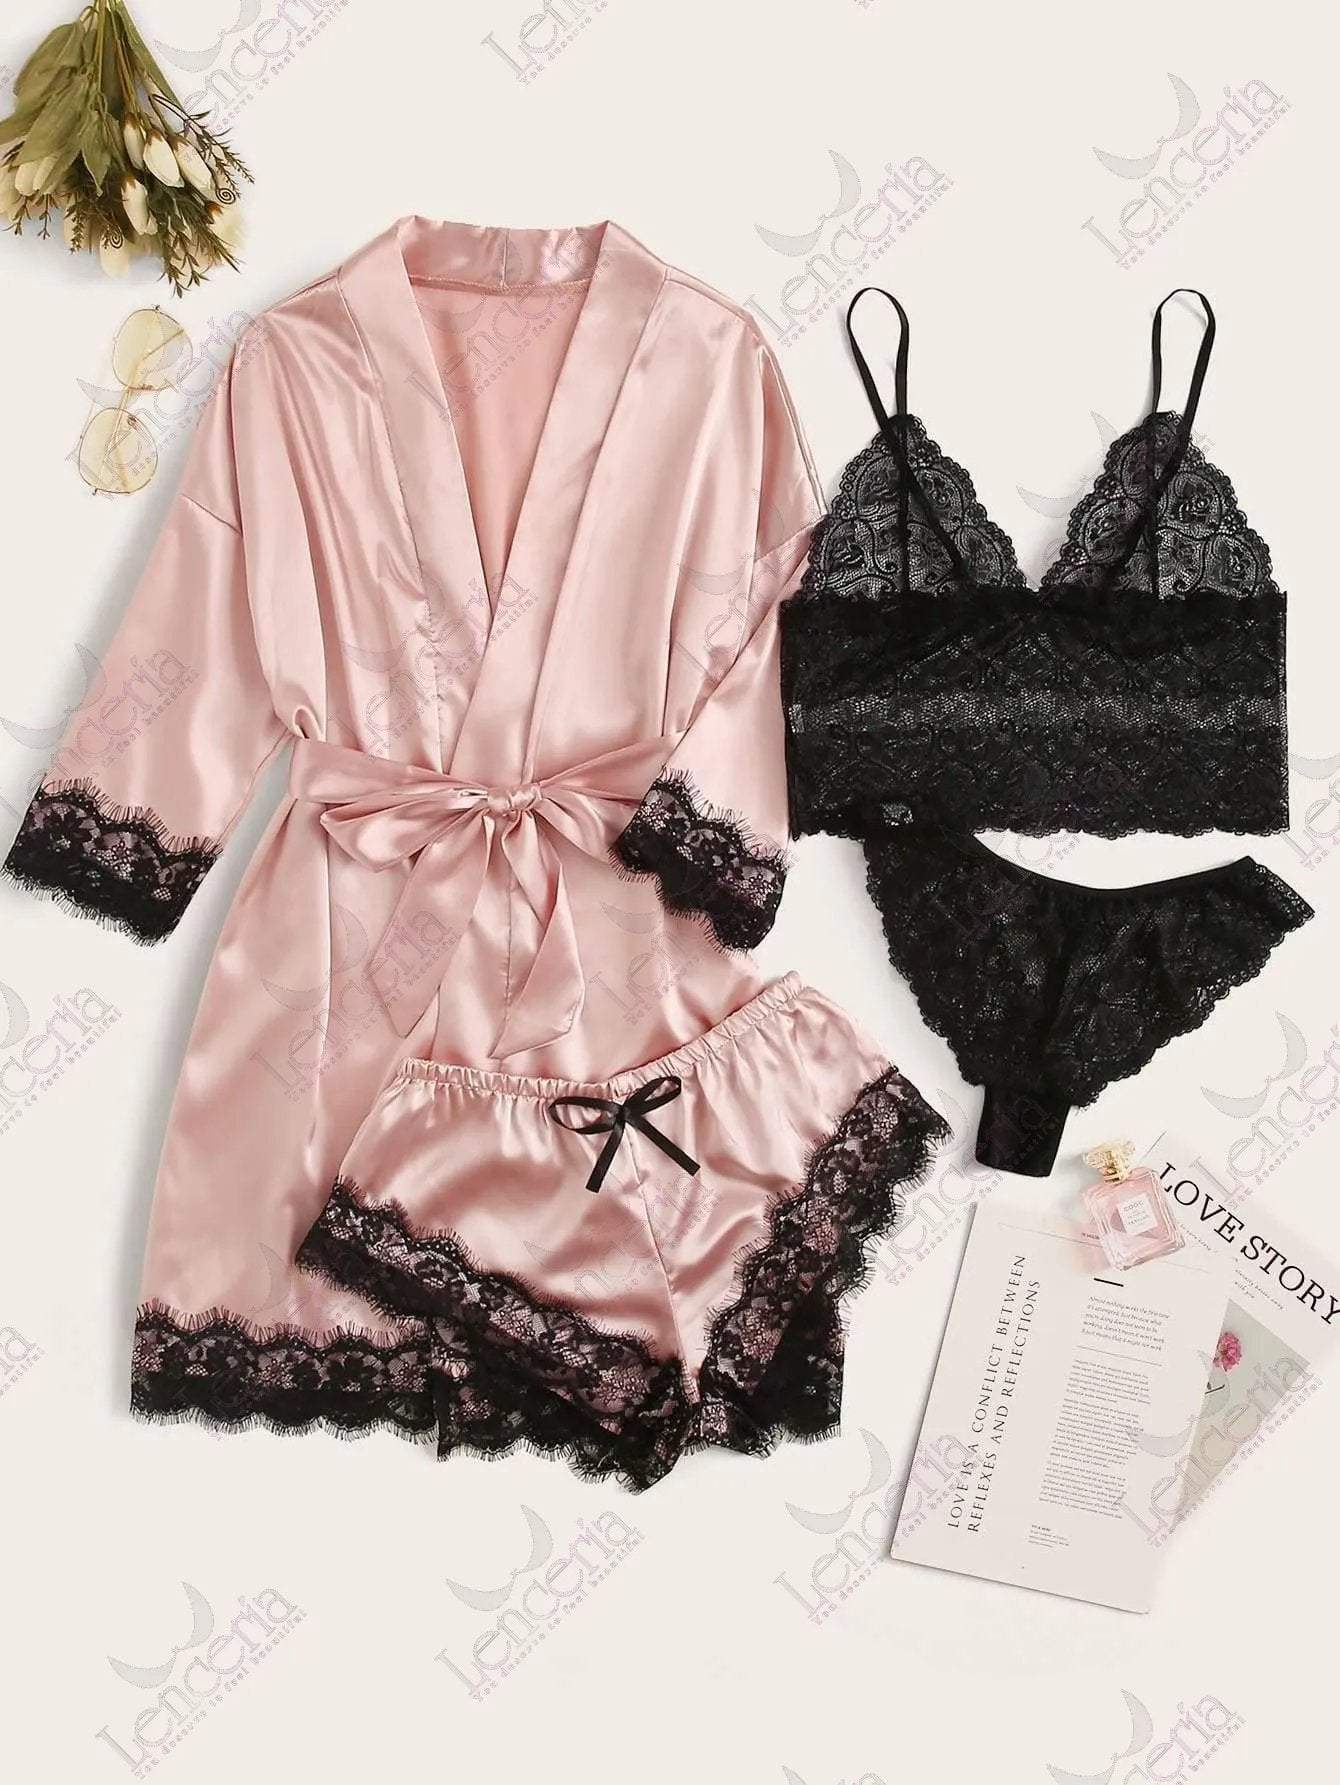 Loving & Pretty Silky pink lingerie set